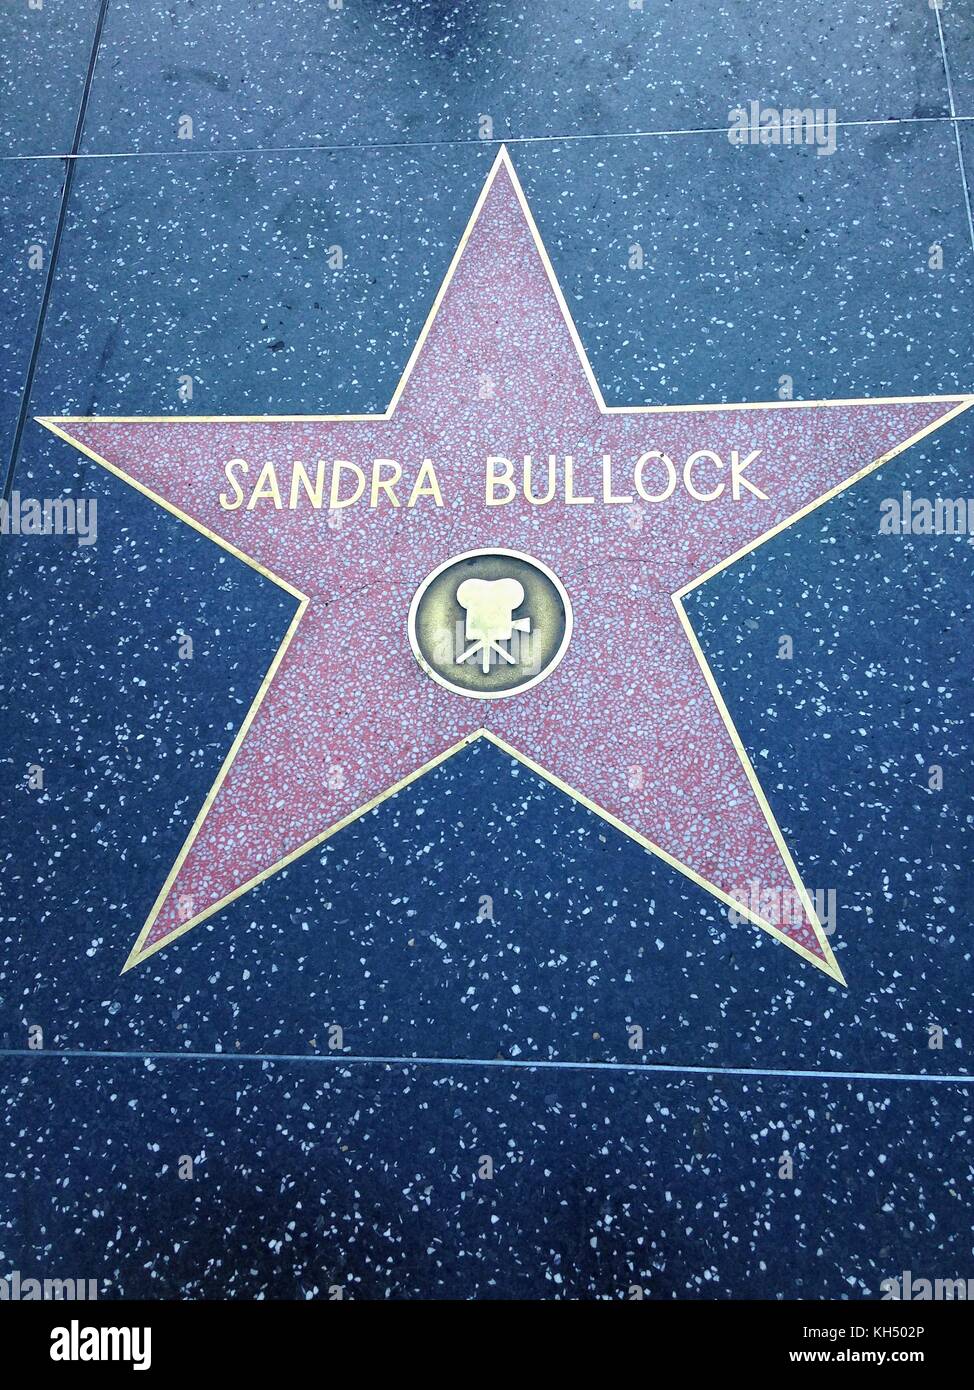 Hollywood, California - July 26 2017: Sandra Bullock Hollywood walk of fame star on July 26, 2017 in Hollywood, CA. Stock Photo